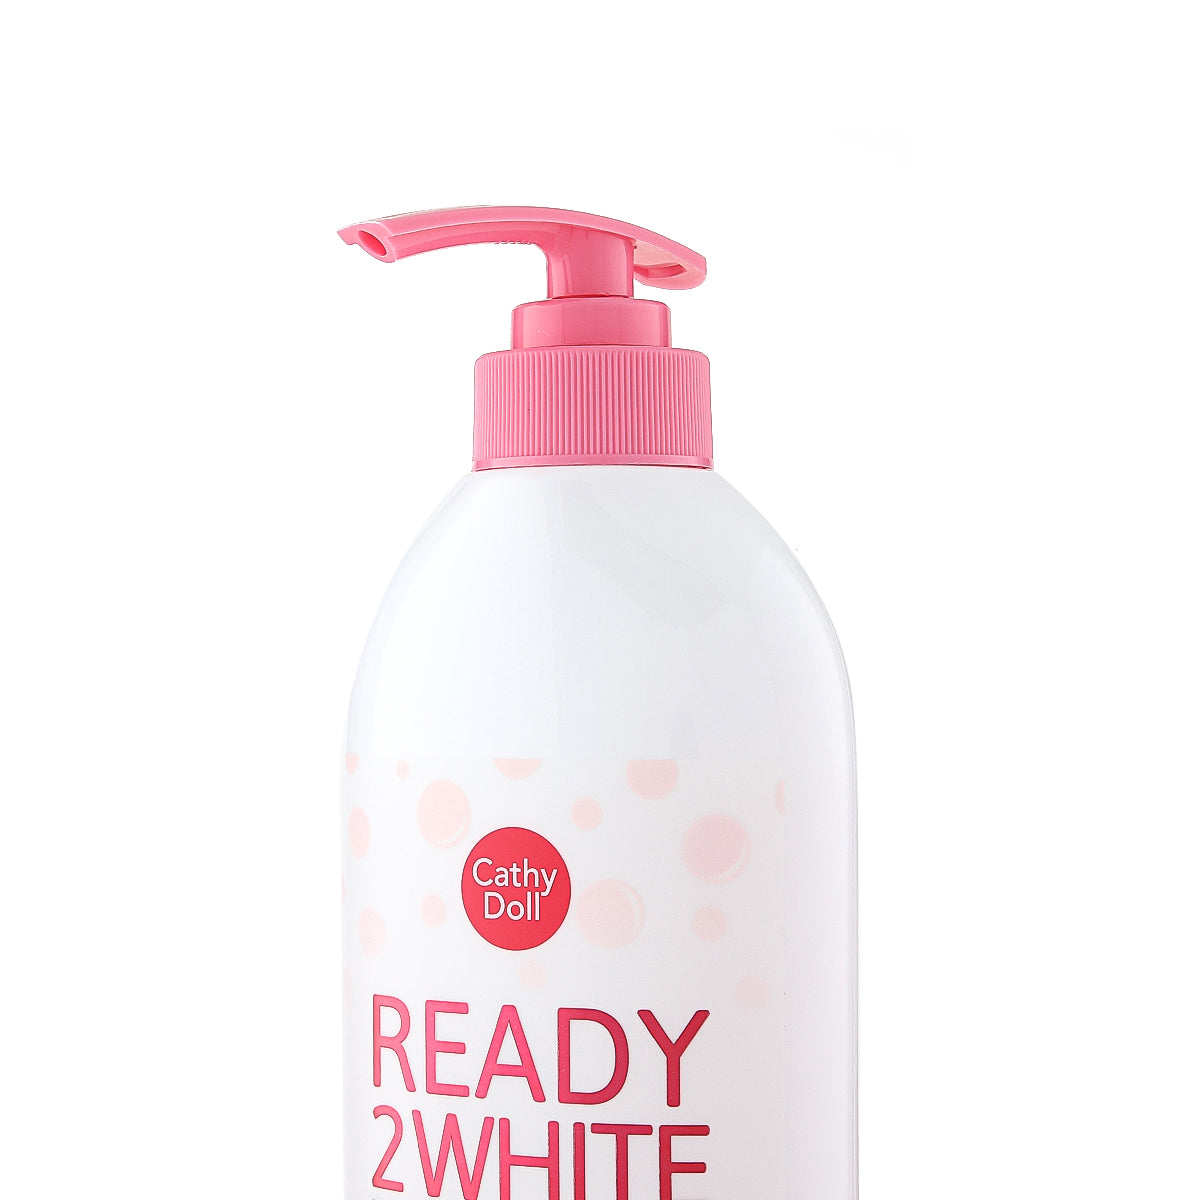 Cathy Doll Ready 2 White Pearl & Rose Serum Body Bath Cream - 500ml